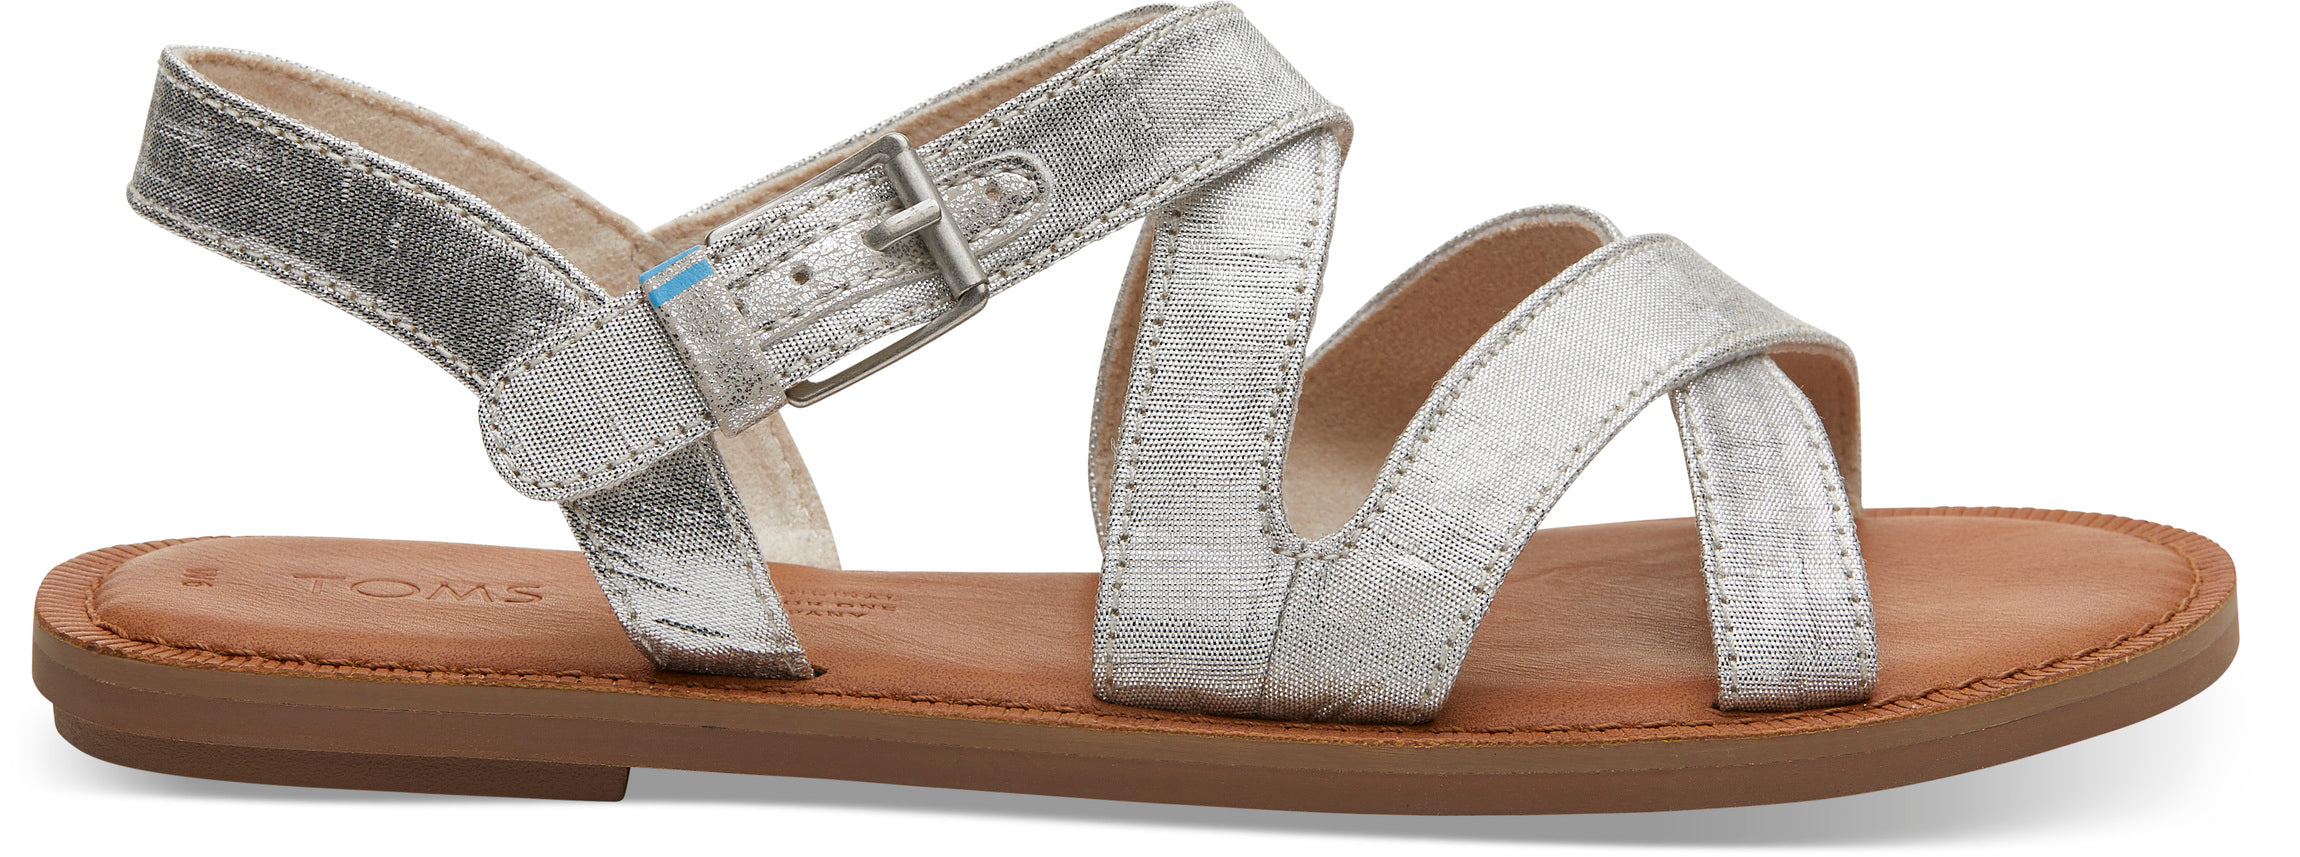 Dámské stříbrné sandálky TOMS Silver Metallic Sicily Sandals